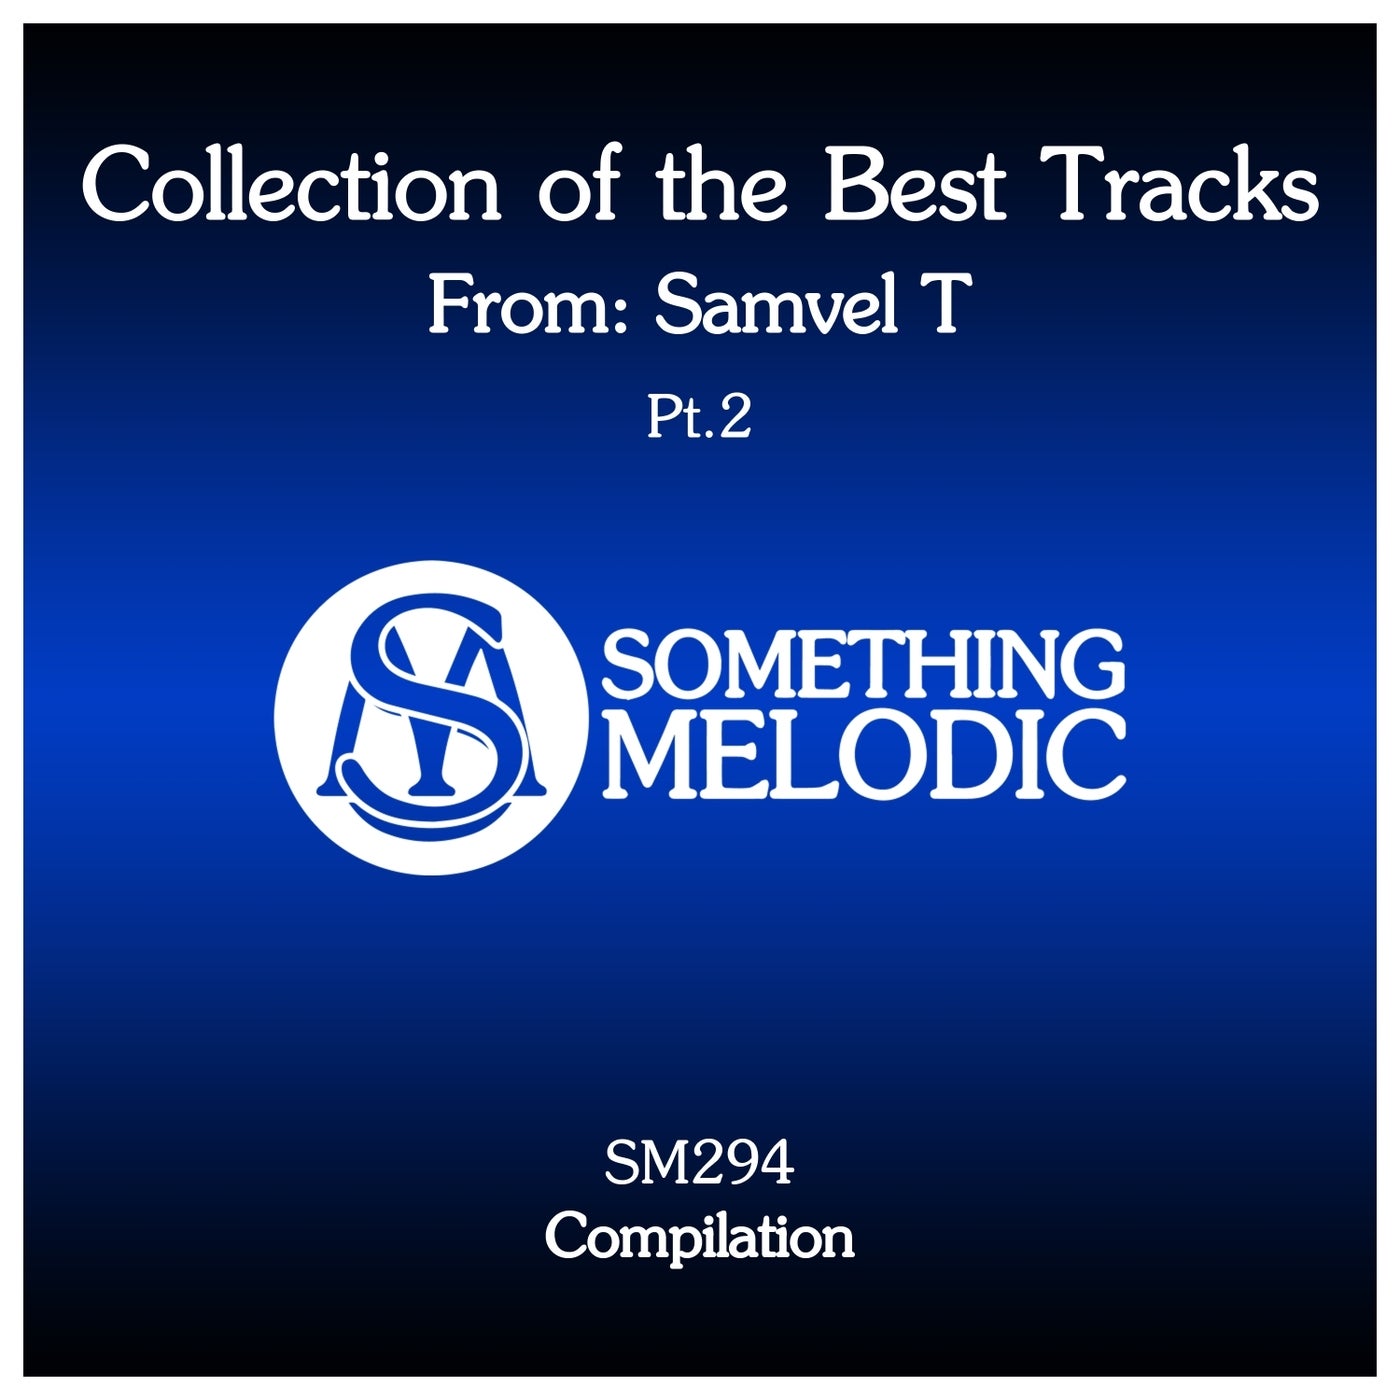 Samvel T – Collection of the Best Tracks From: Samvel T, Pt. 2 [SM294]